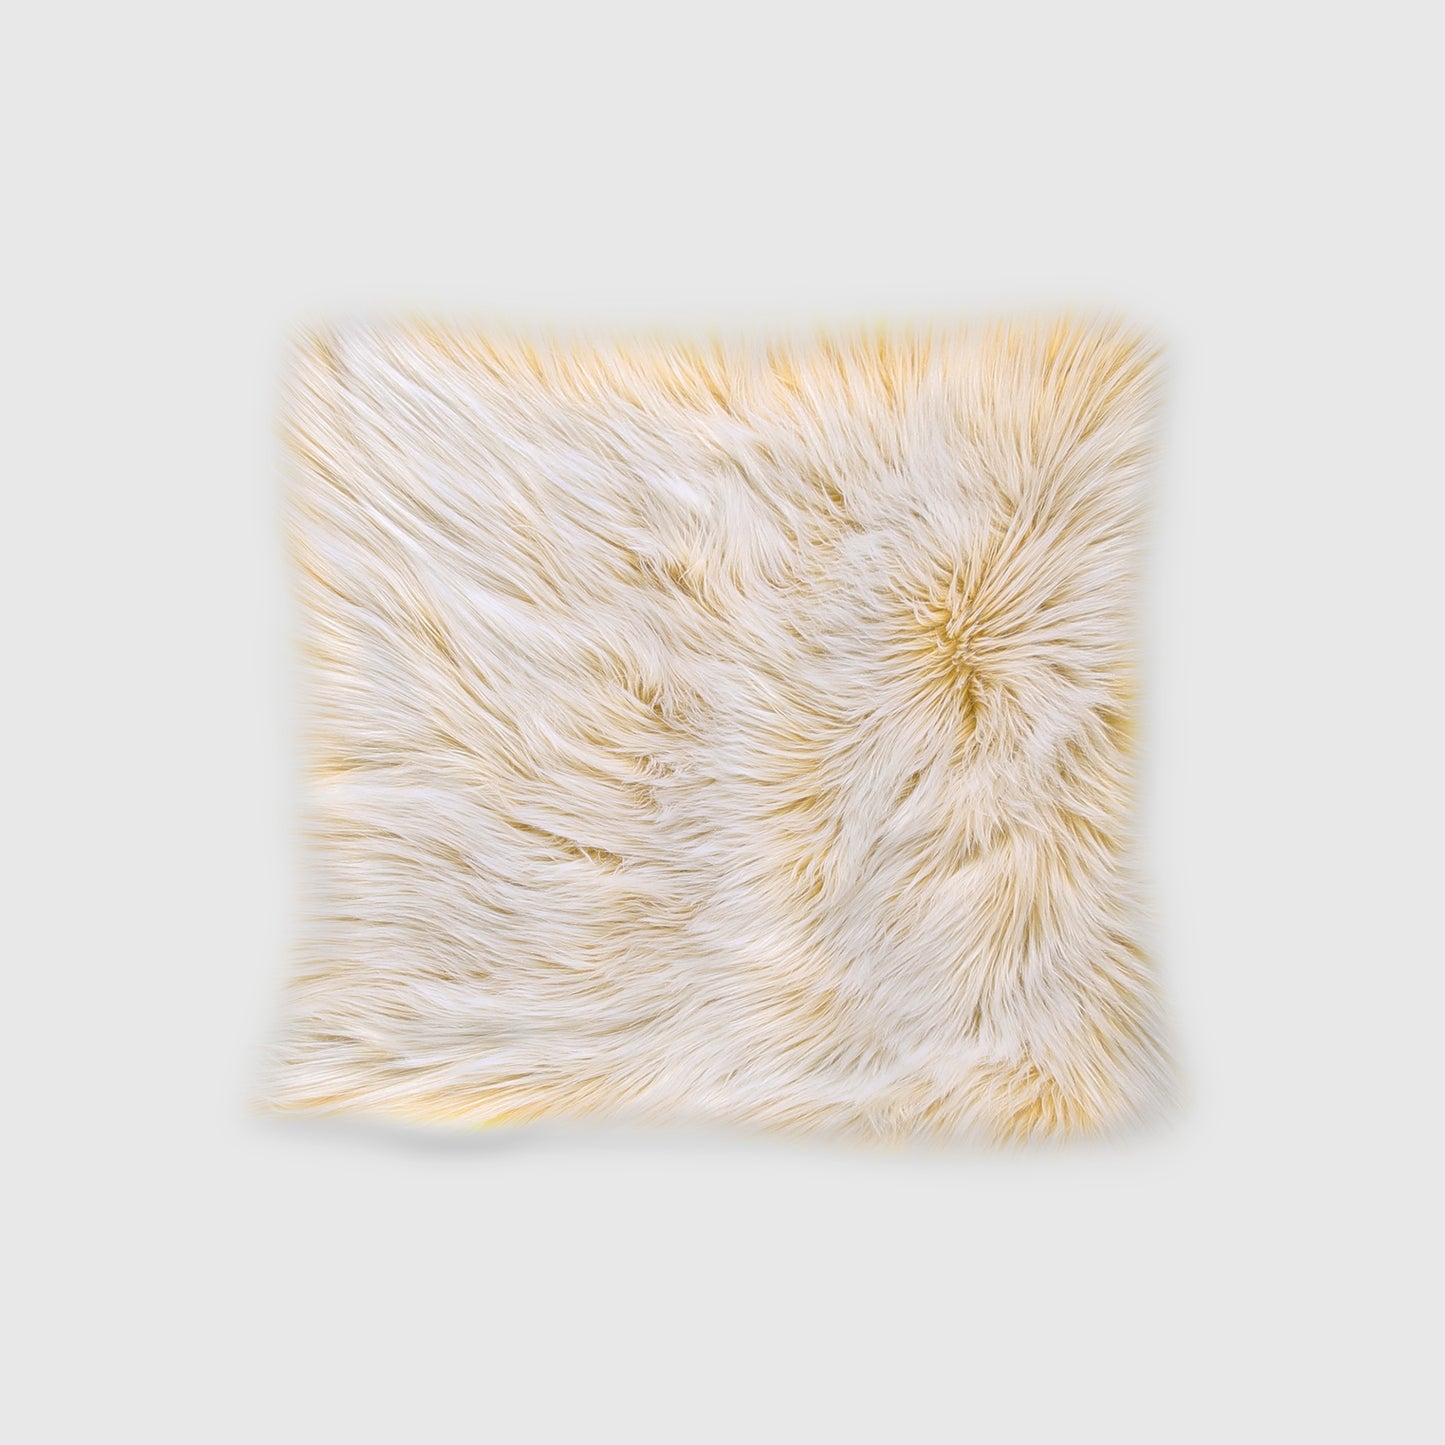 The Mood | Harris Faux Fur 16"x16" Pillow, Pumpkin Pie